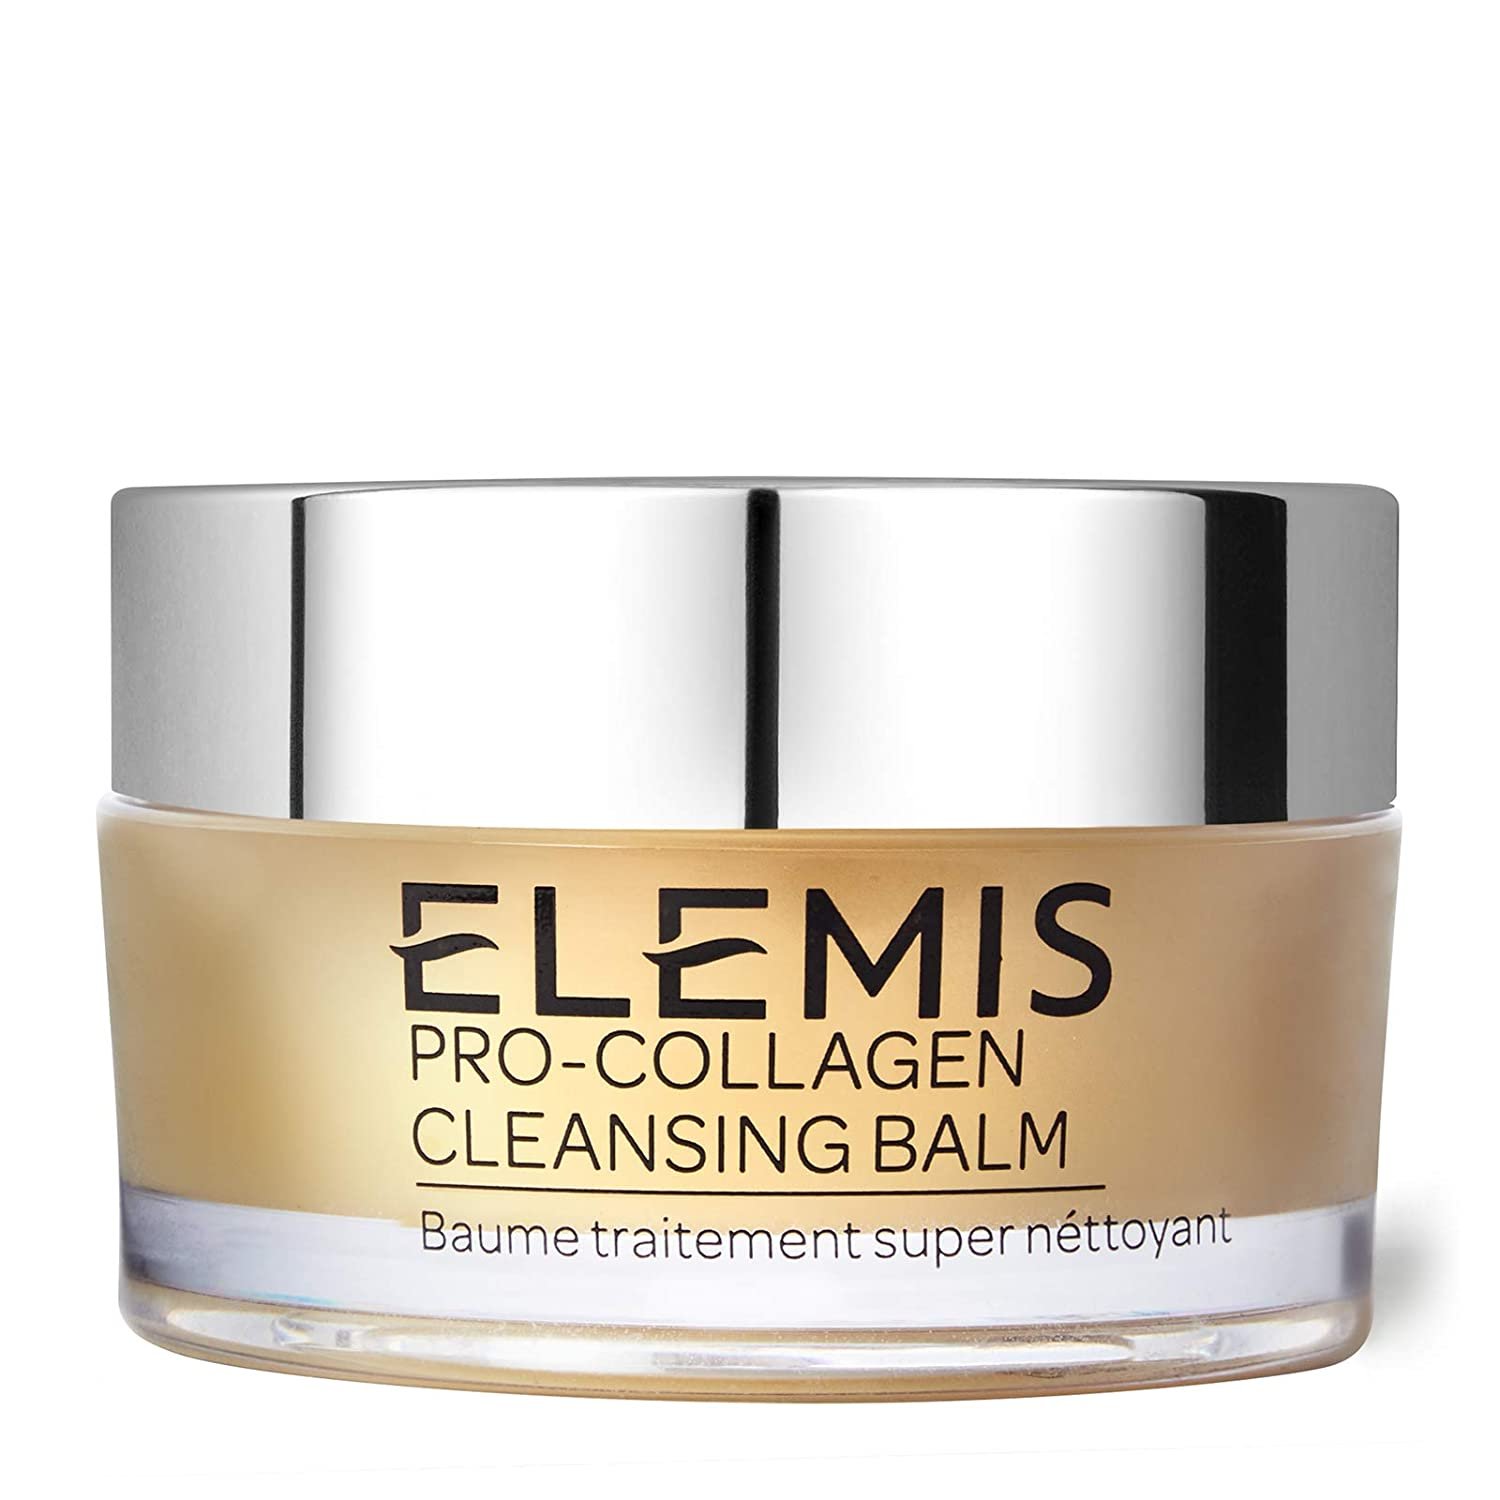 ELEMIS Pro-Collagen Cleansing Balm $11.20